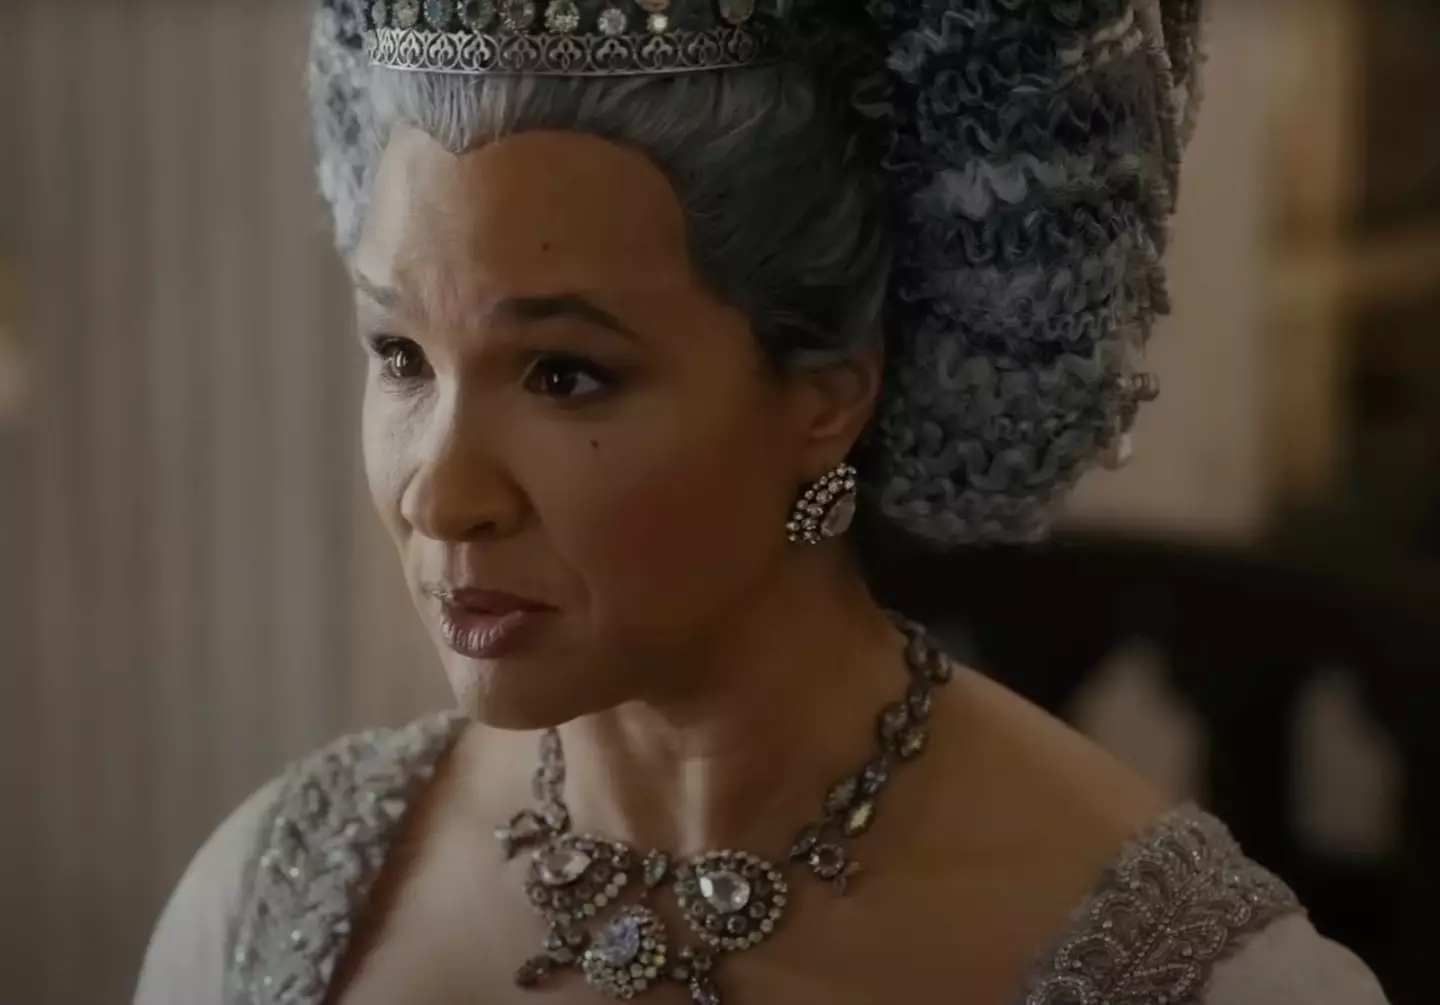 Popular Bridgerton character Golda Rosheuvel will reprise her role as Queen Charlotte.